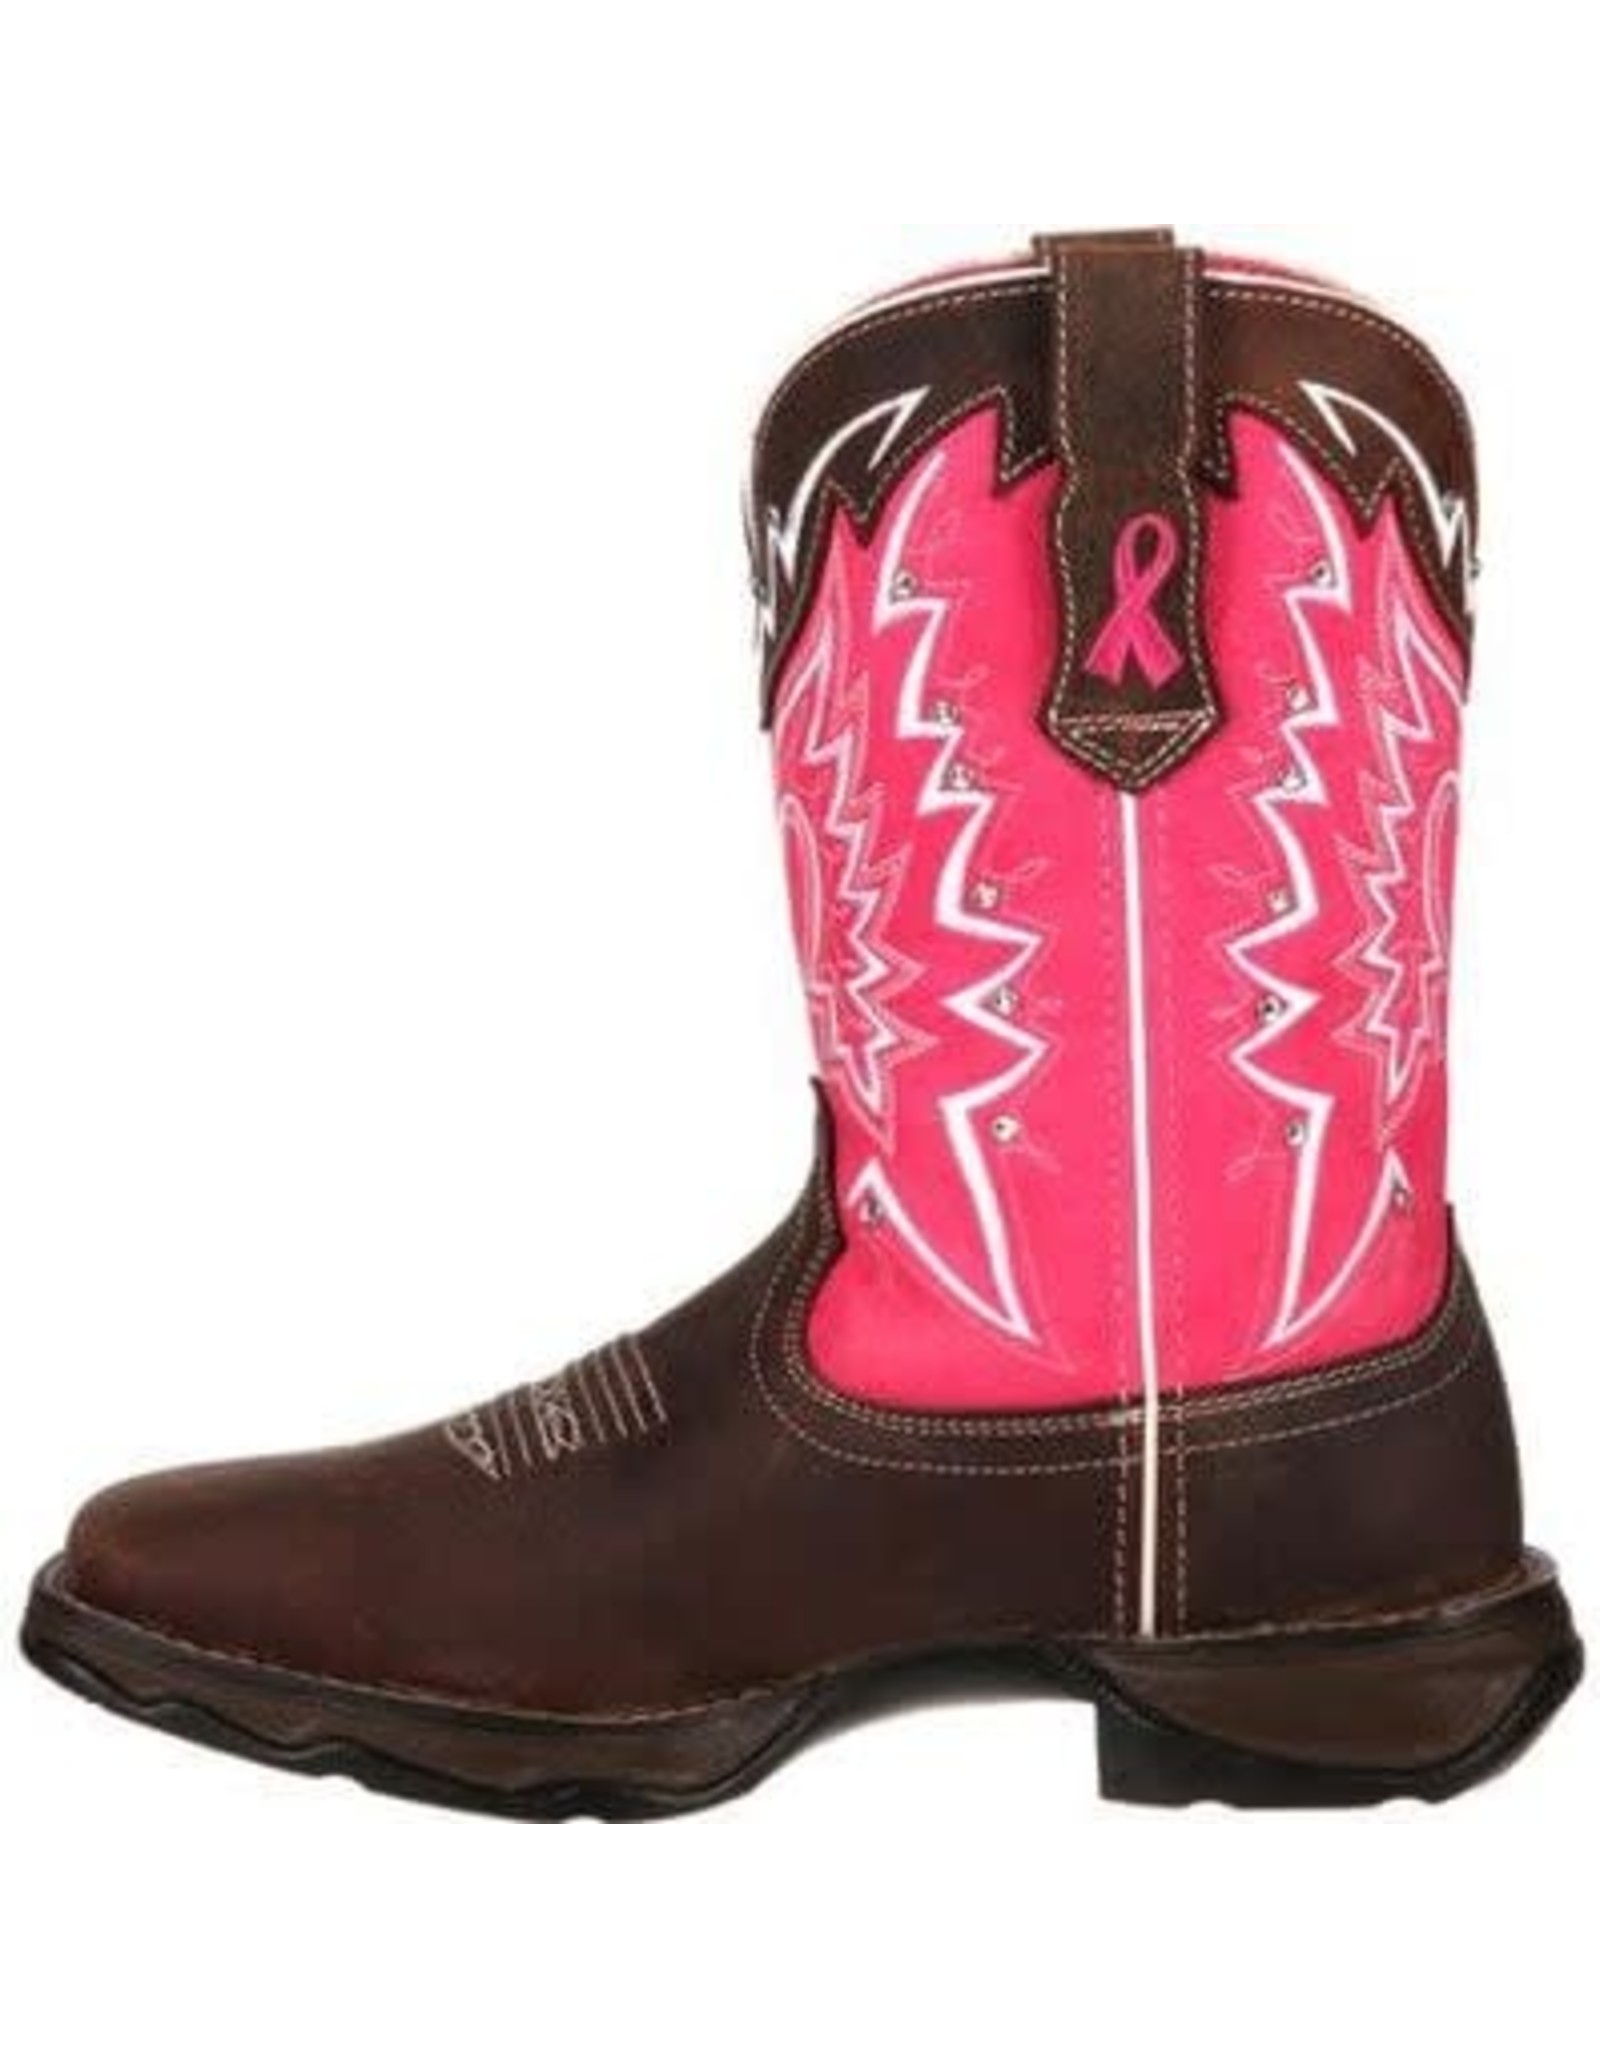 Durango Ladies Rebel Breast Cancer RD3557 Western Boots